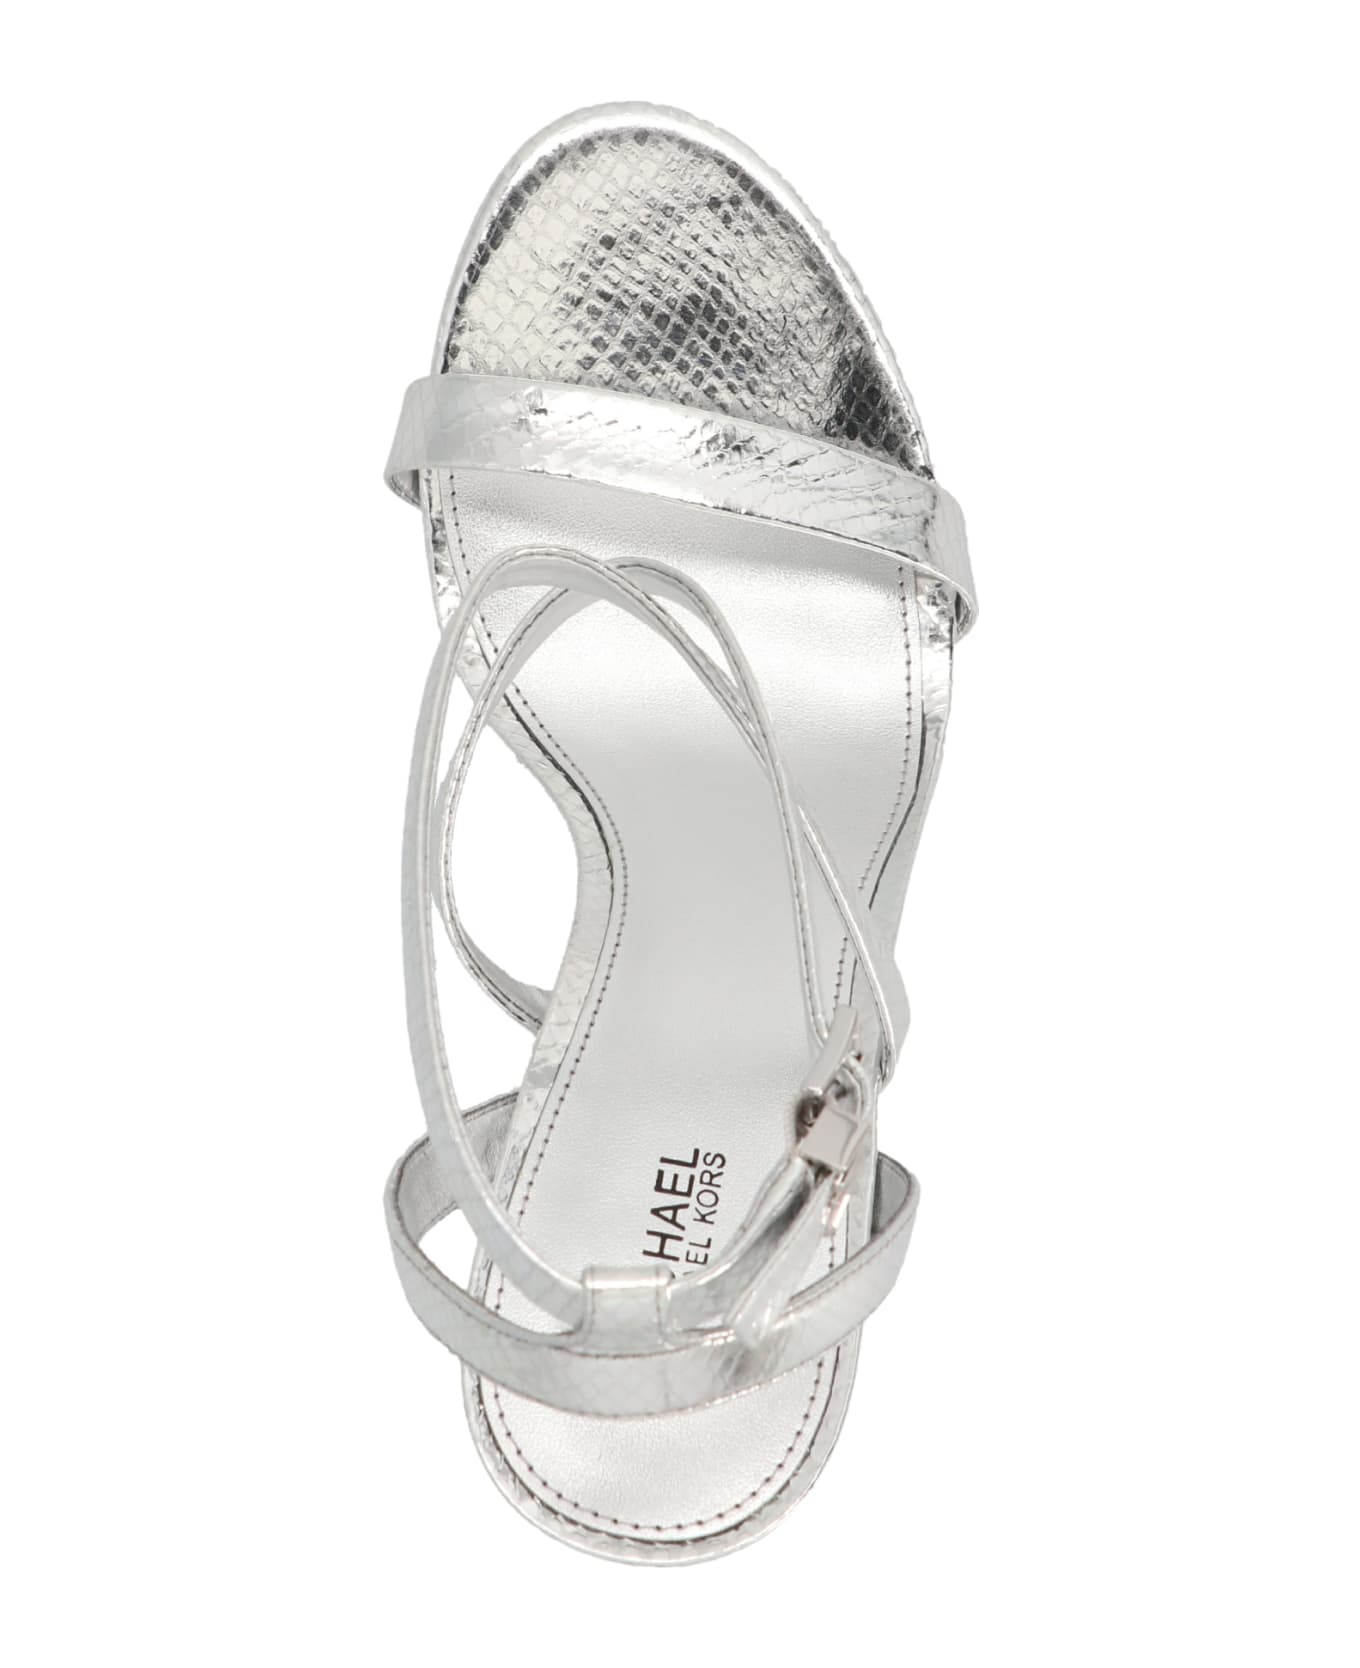 Michael Kors Asha Heeled Leather Sandals - Silver サンダル